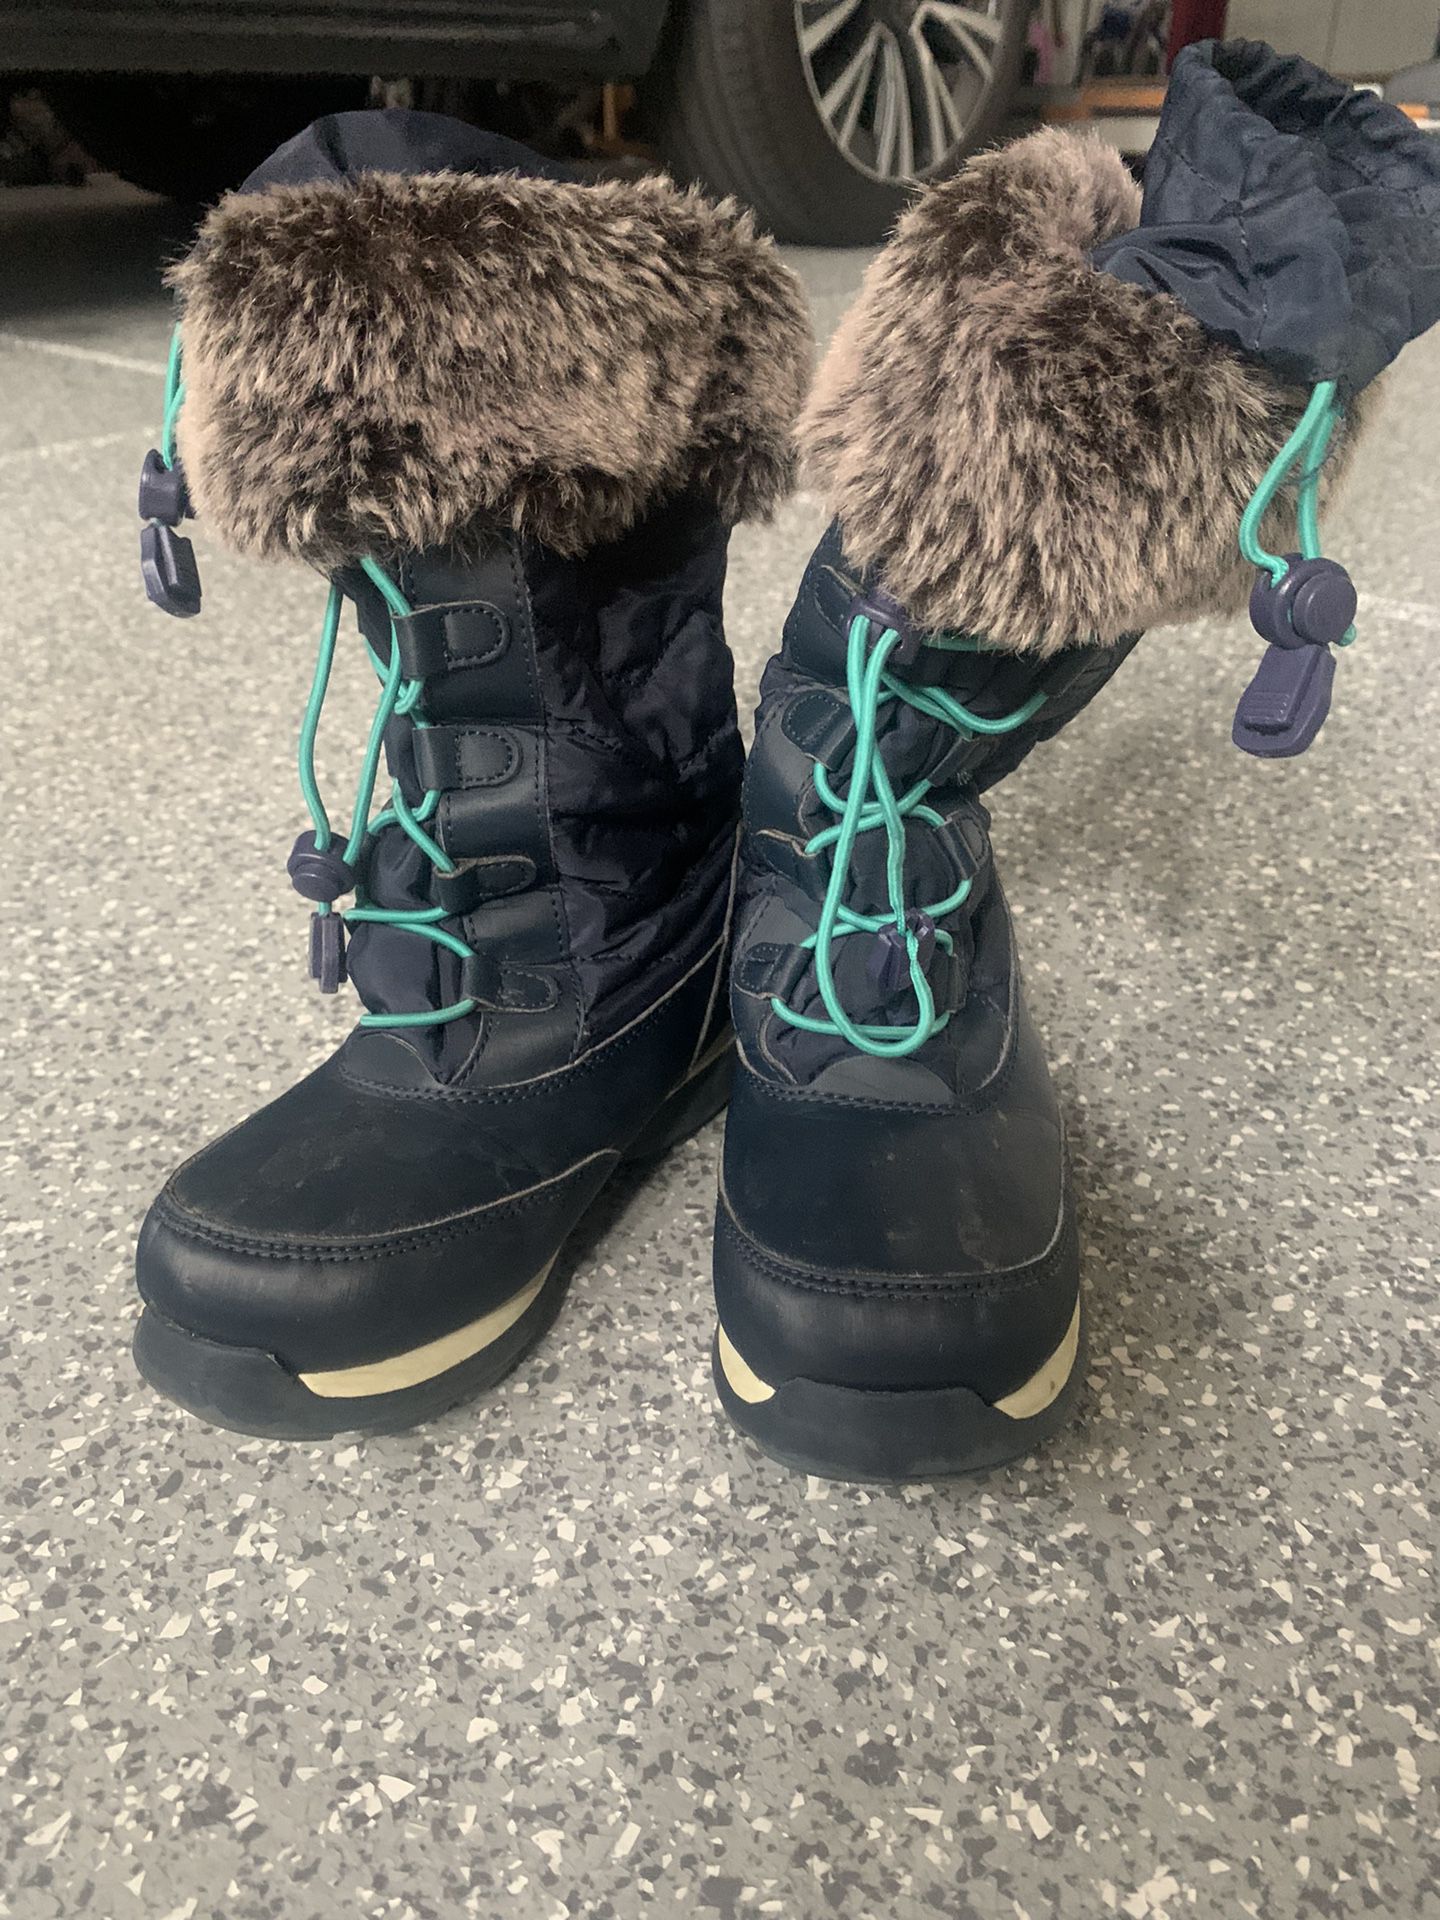 Lands End girls Snow boots Size 11 Blue